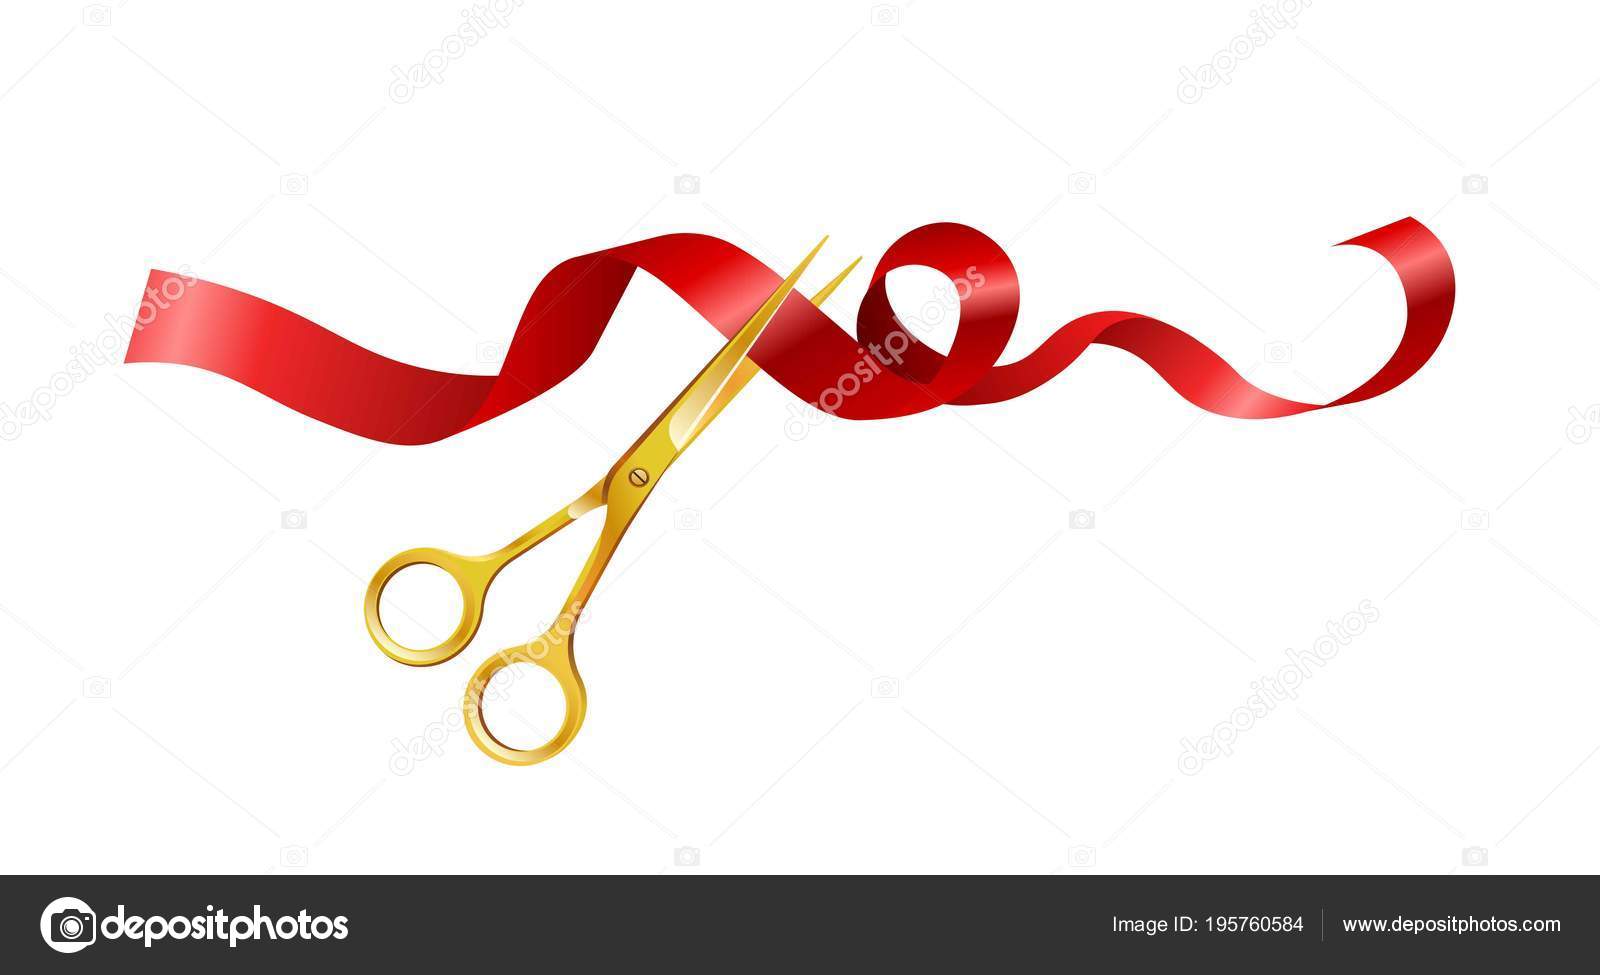 https://st3.depositphotos.com/1028367/19576/v/1600/depositphotos_195760584-stock-illustration-scissors-cutting-red-ribbon-symbol.jpg